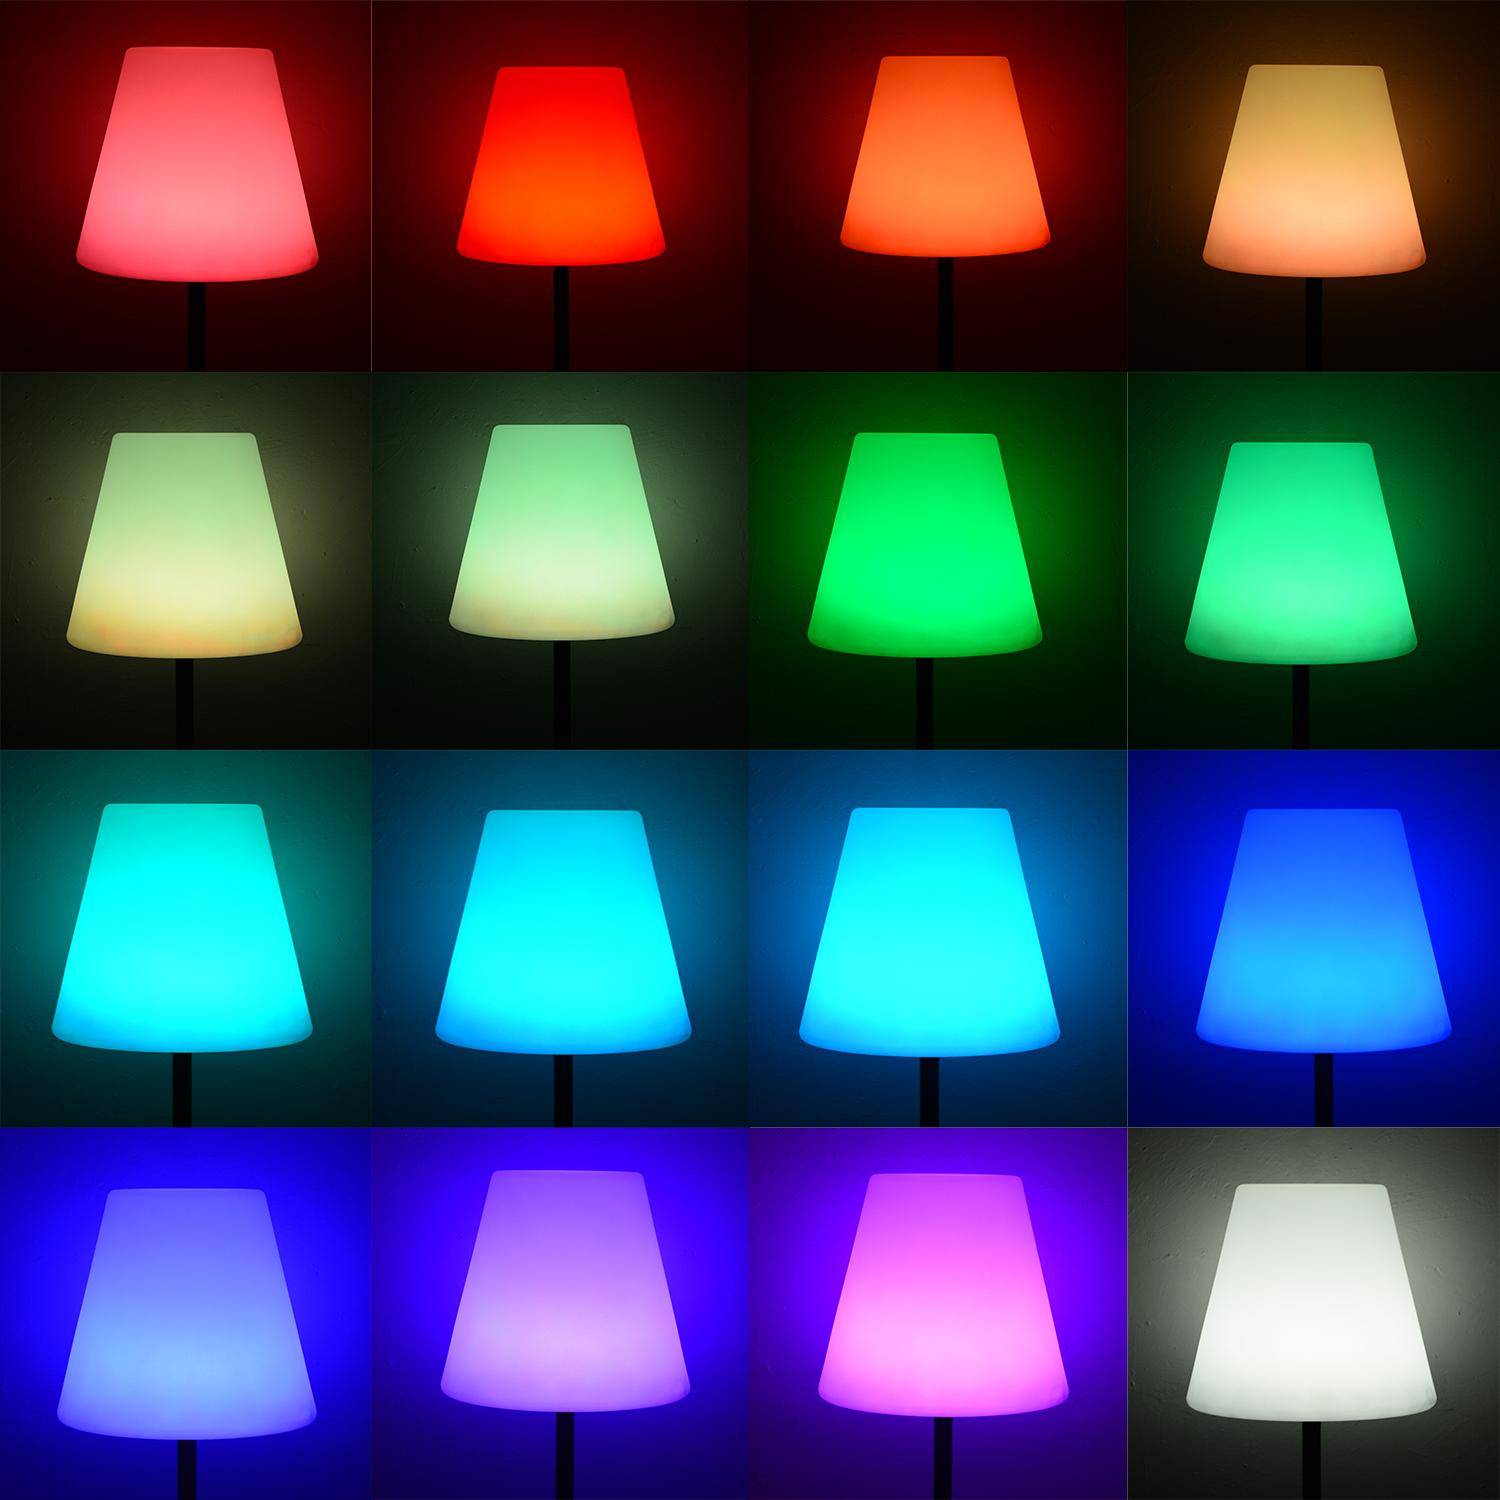 Staande lamp voor buiten 100 cm LAMPADA L LED hybride, multicolor staande lamp, design op batterij, zonne-energie, afstandsbediening,sweeek,Photo7